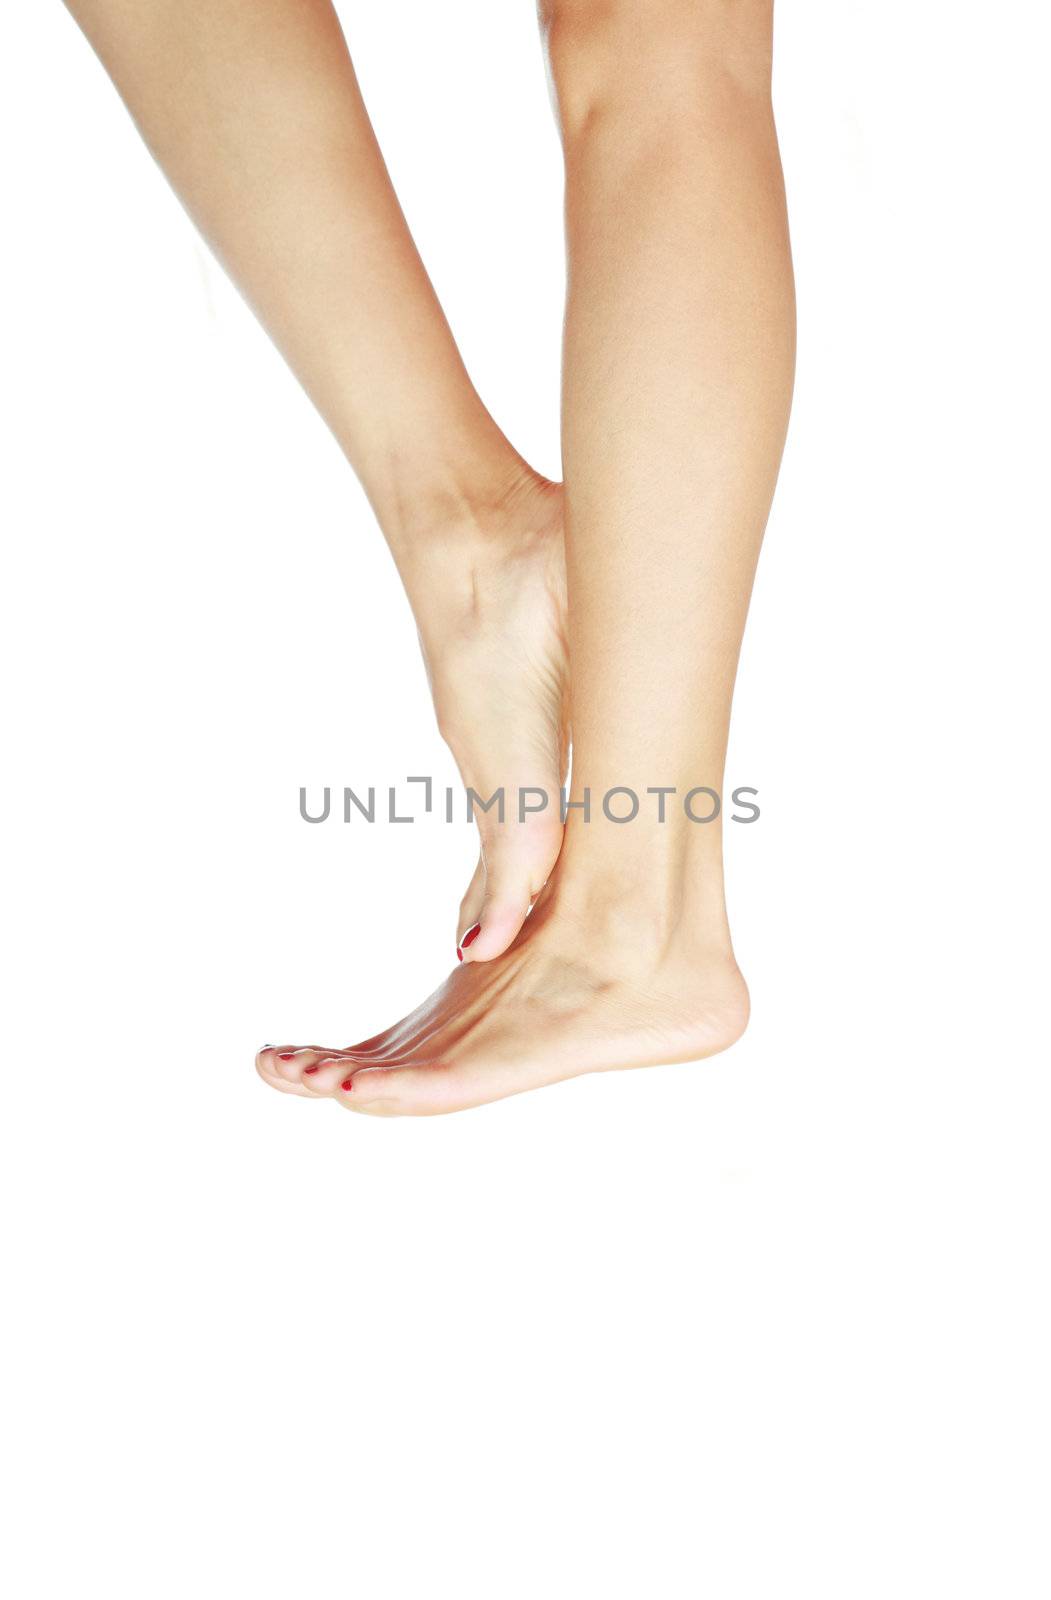 Female shoeless feet on a white background